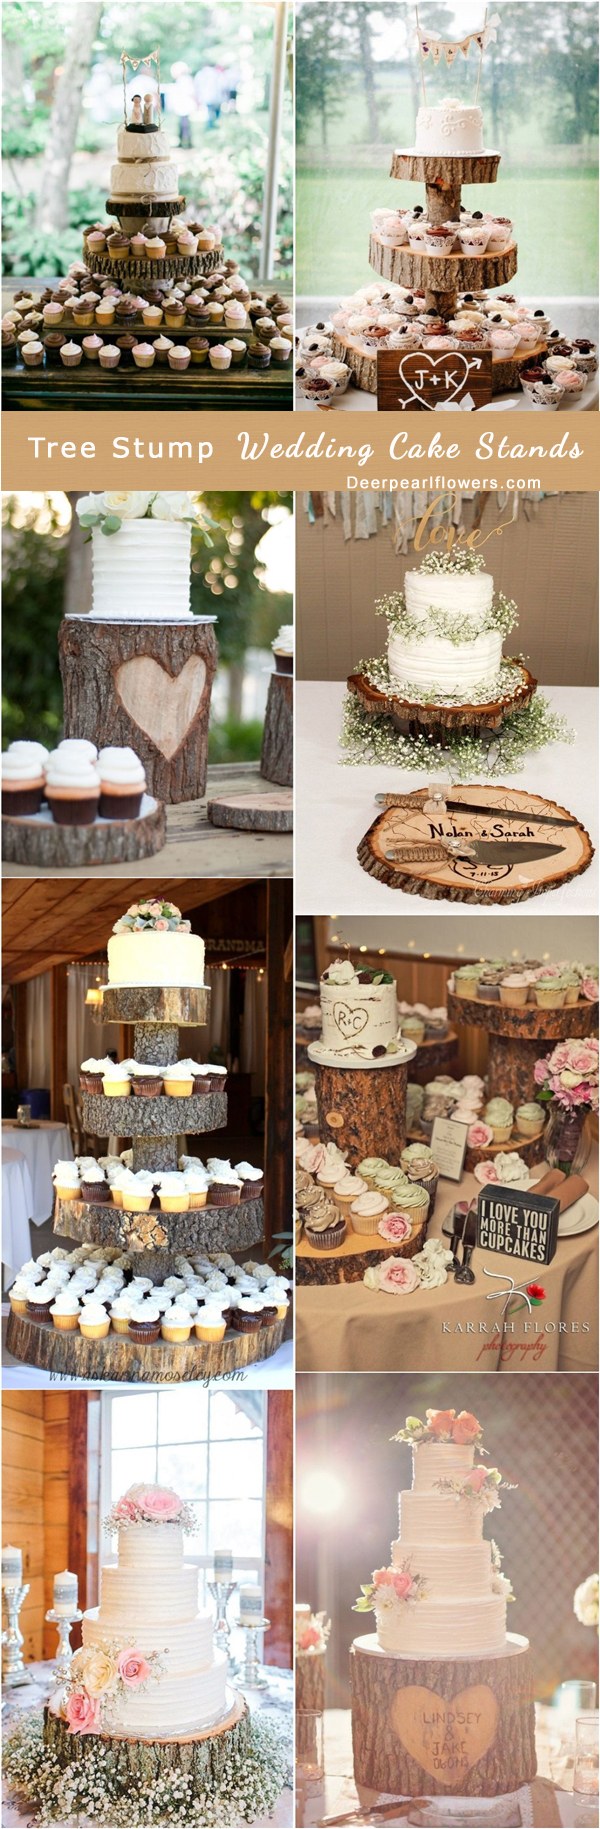 Rustic Tree Stump Wedding Cake Stand